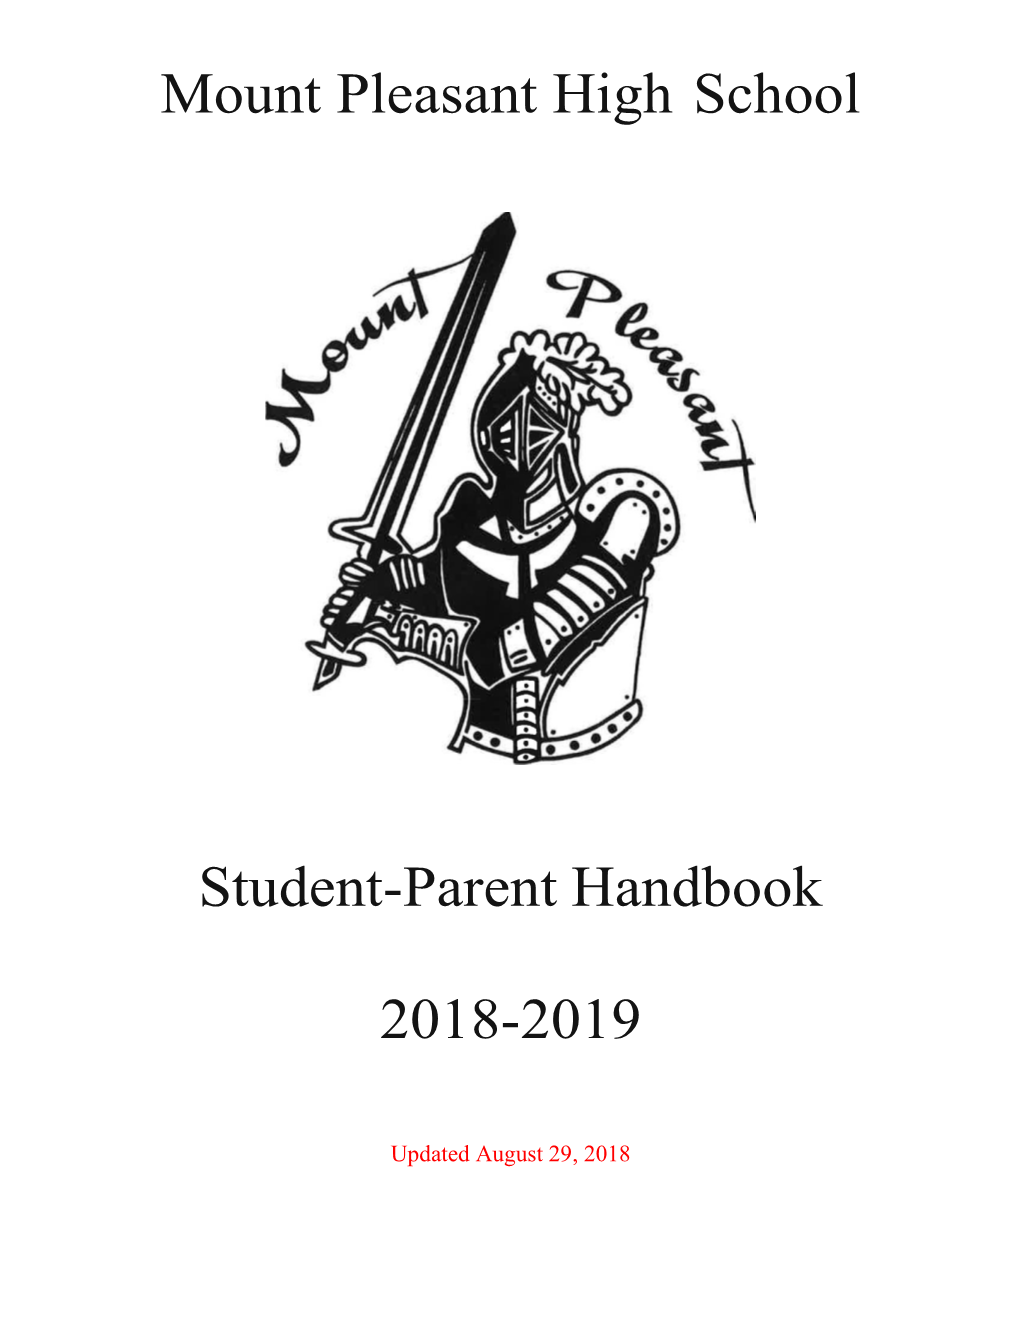 Mount Pleasant High School Student-Parent Handbook 2018-2019